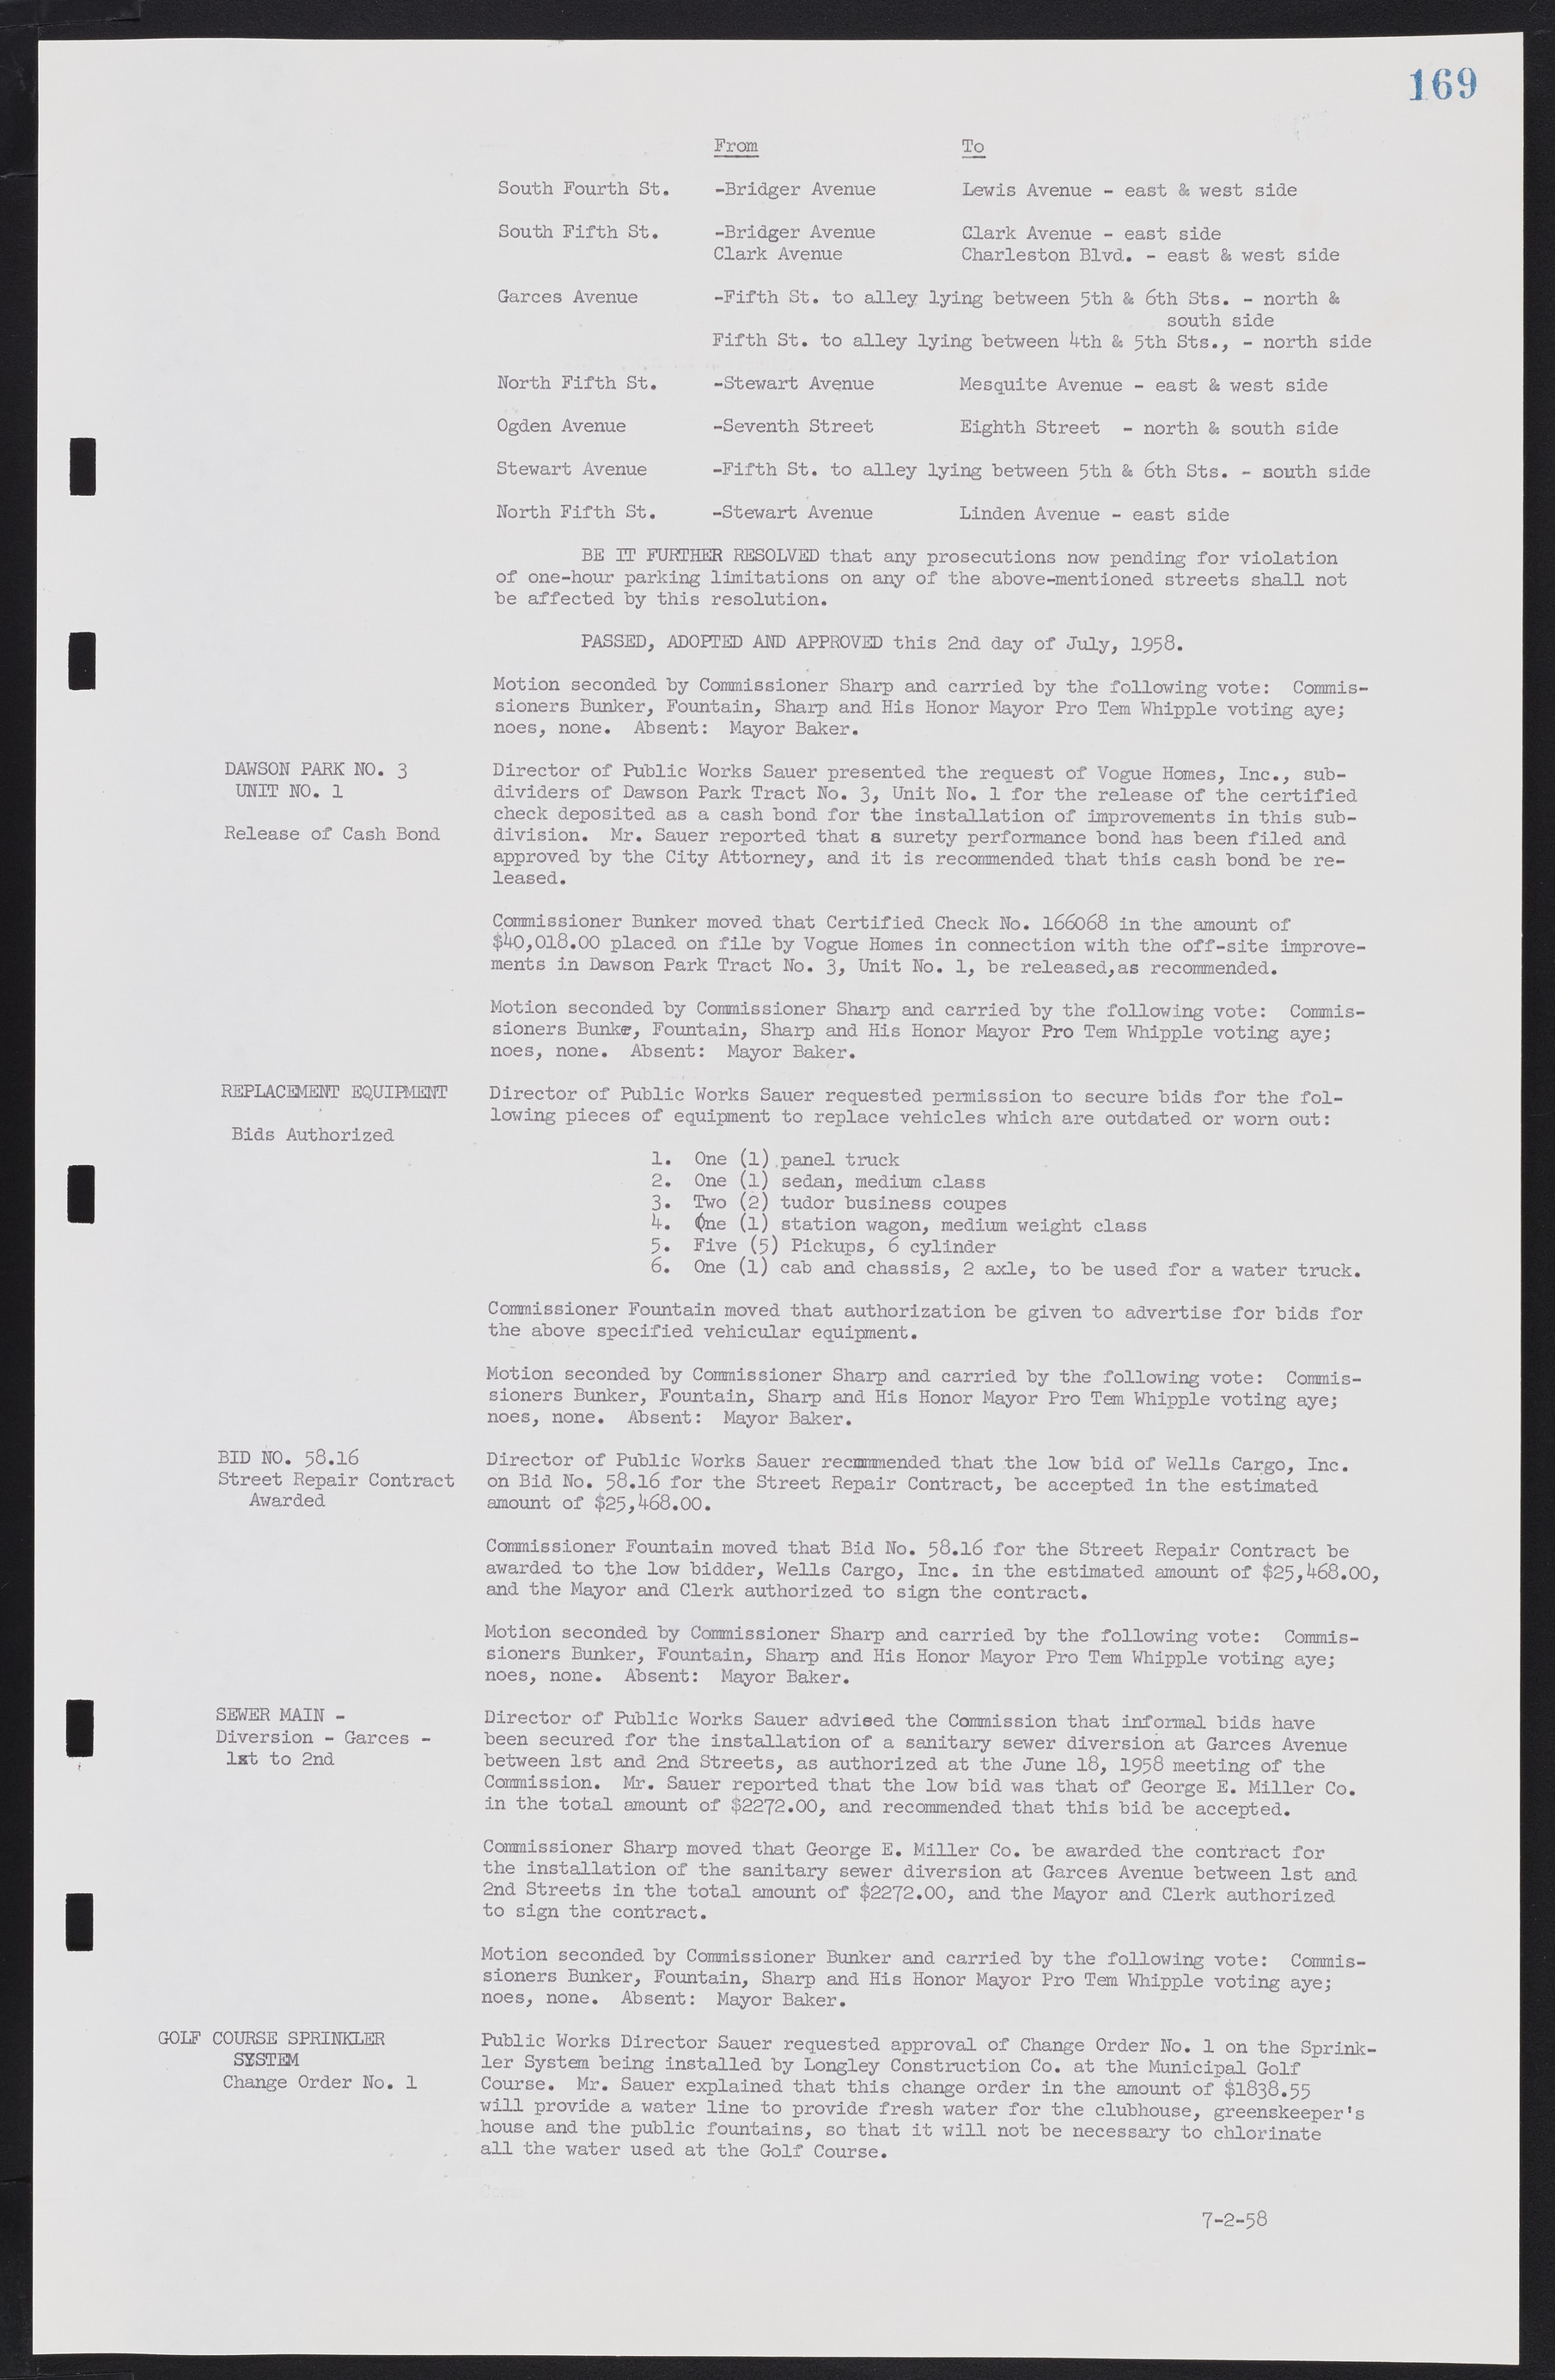 Las Vegas City Commission Minutes, November 20, 1957 to December 2, 1959, lvc000011-173